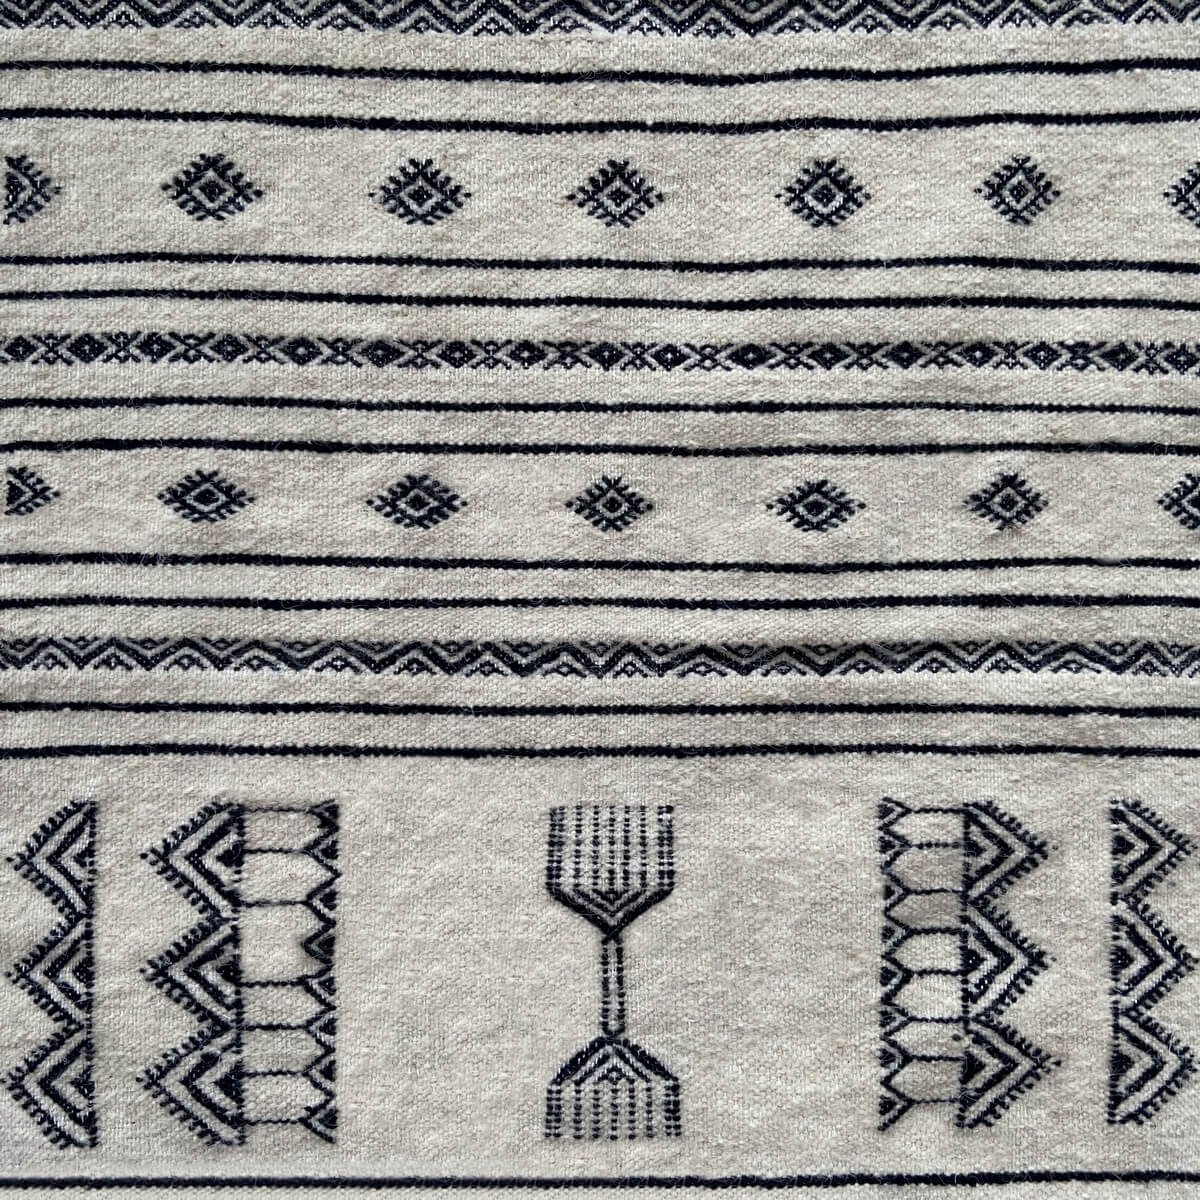 Berber carpet Rug Kilim Abez 60x104 cm Black and white (Handmade, Wool, Tunisia) Tunisian Rug Kilim style Moroccan rug. Rectangu